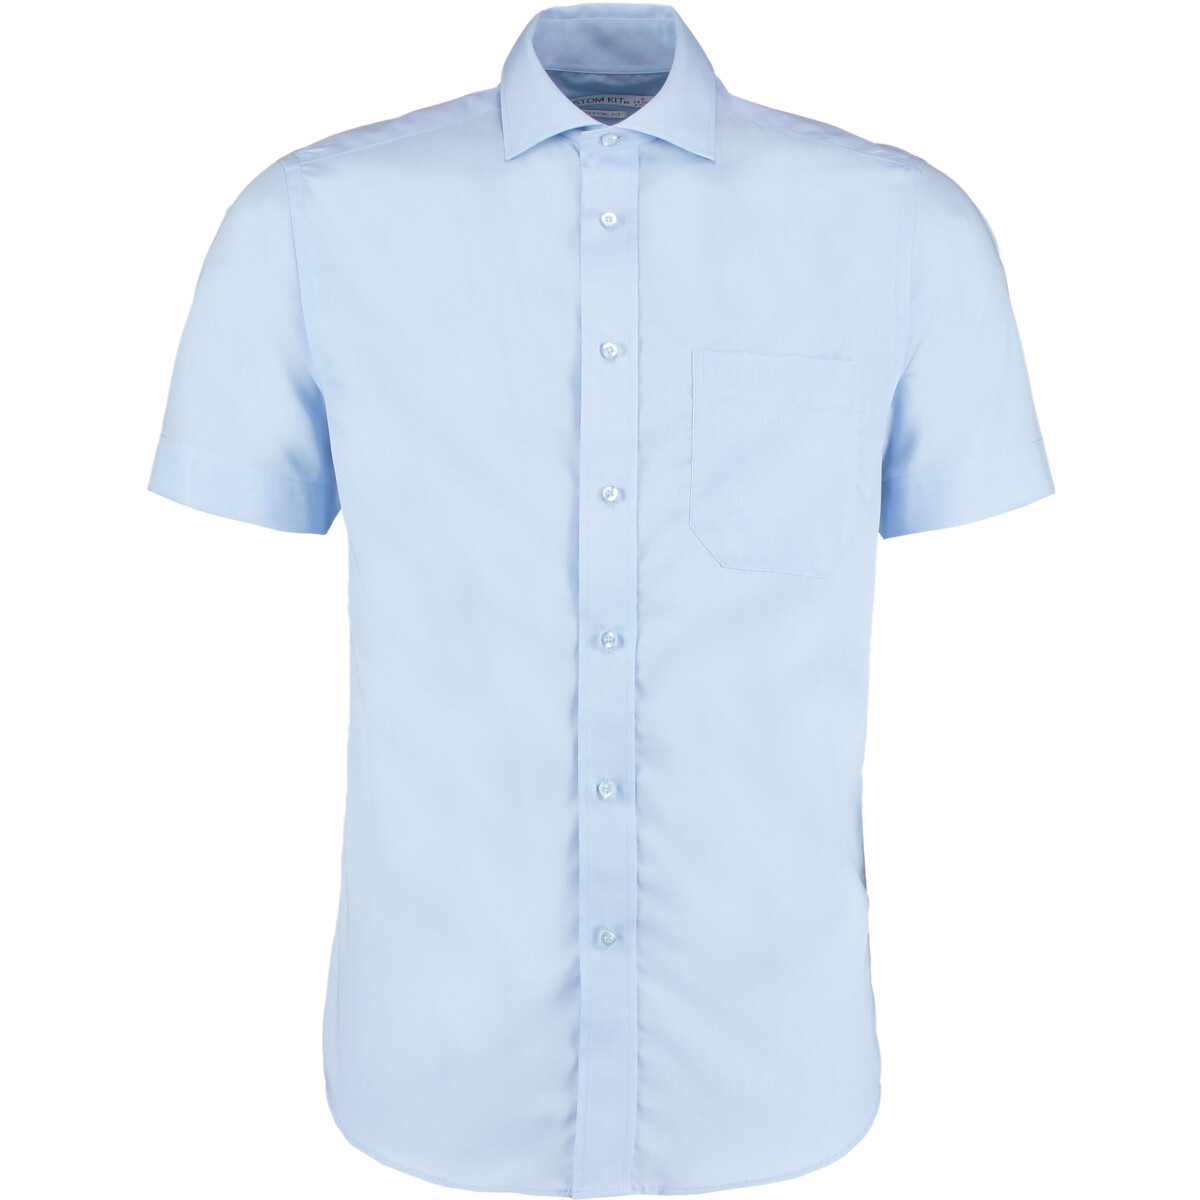 KK105 Premium Oxford Shirt - Kustom Kit